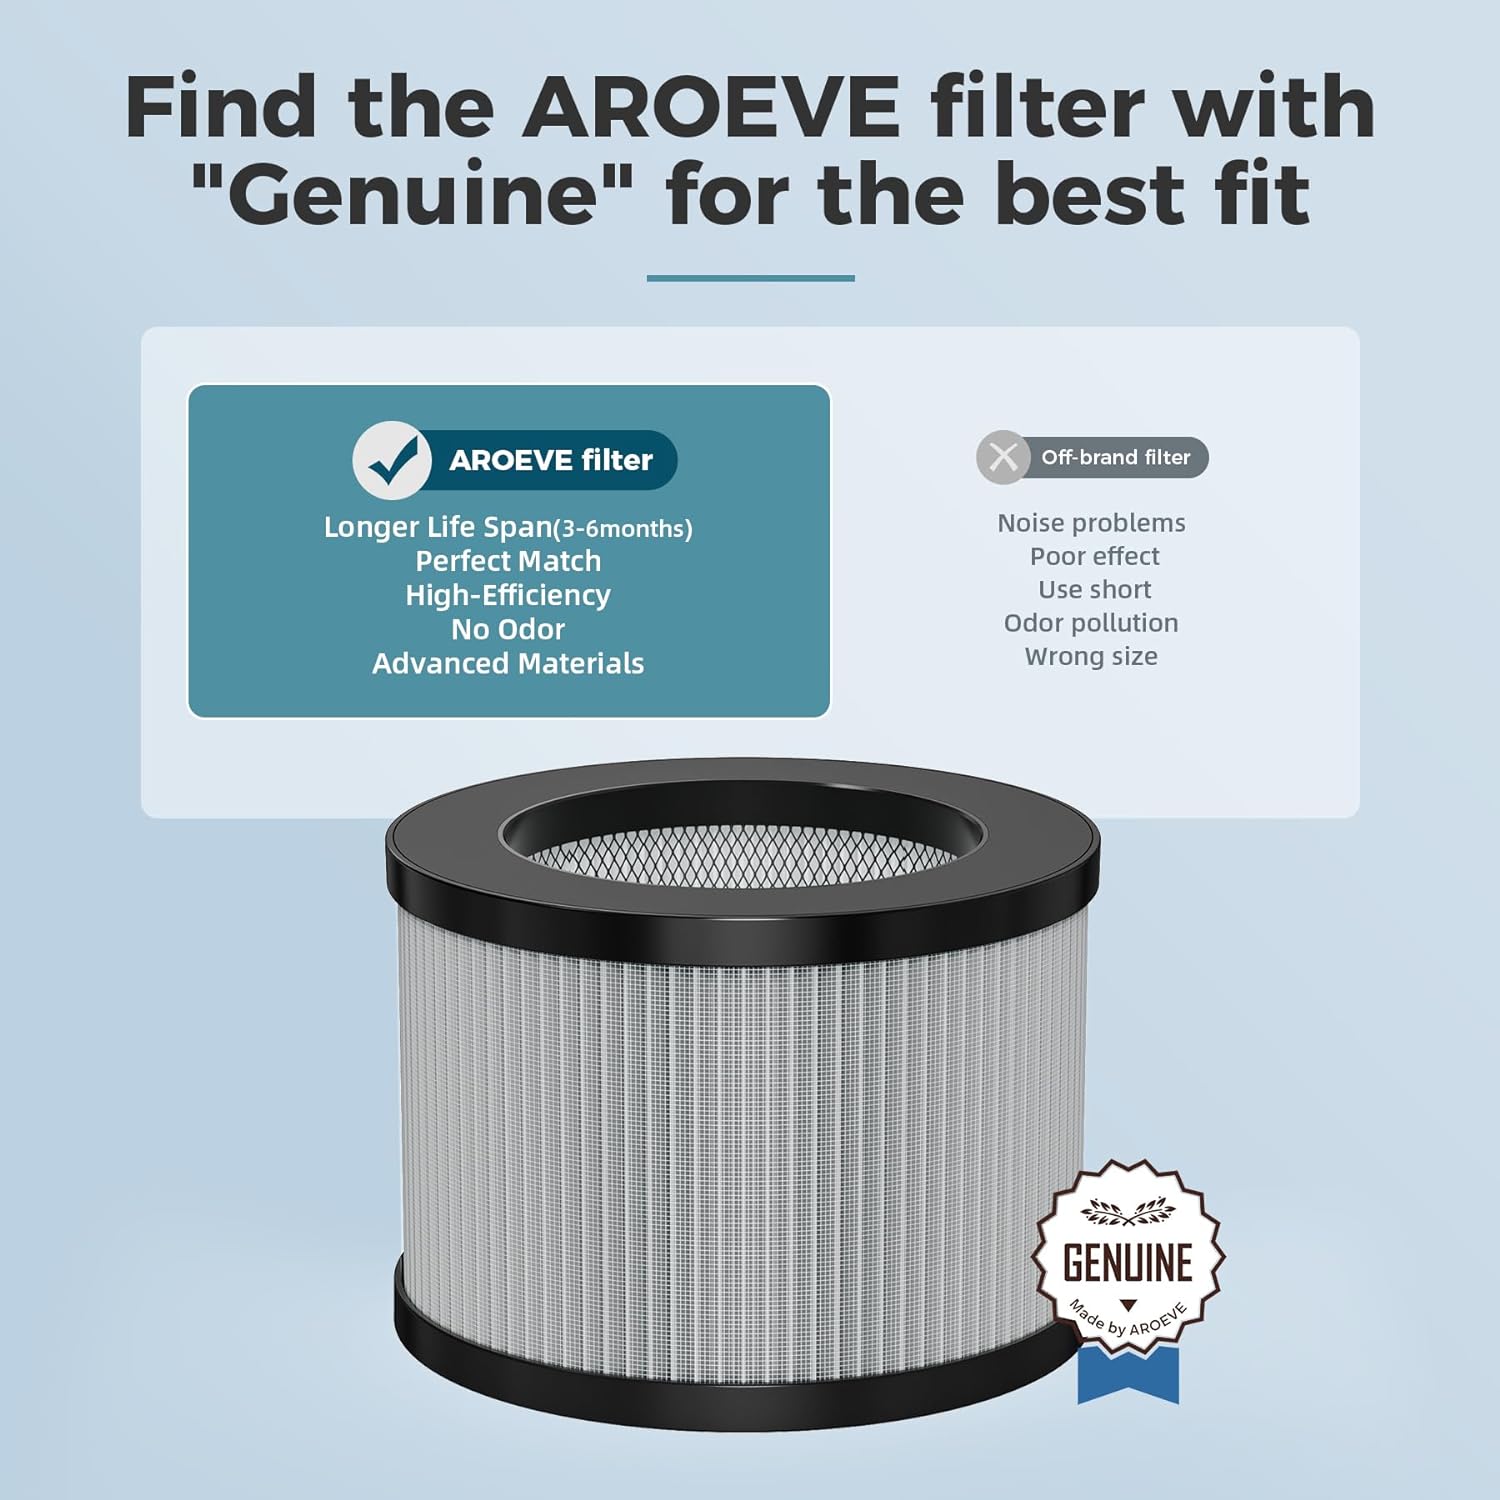 AROEVE Air Filter Replacement | MK01 & MK06- Enhanced Smoke Removal Version